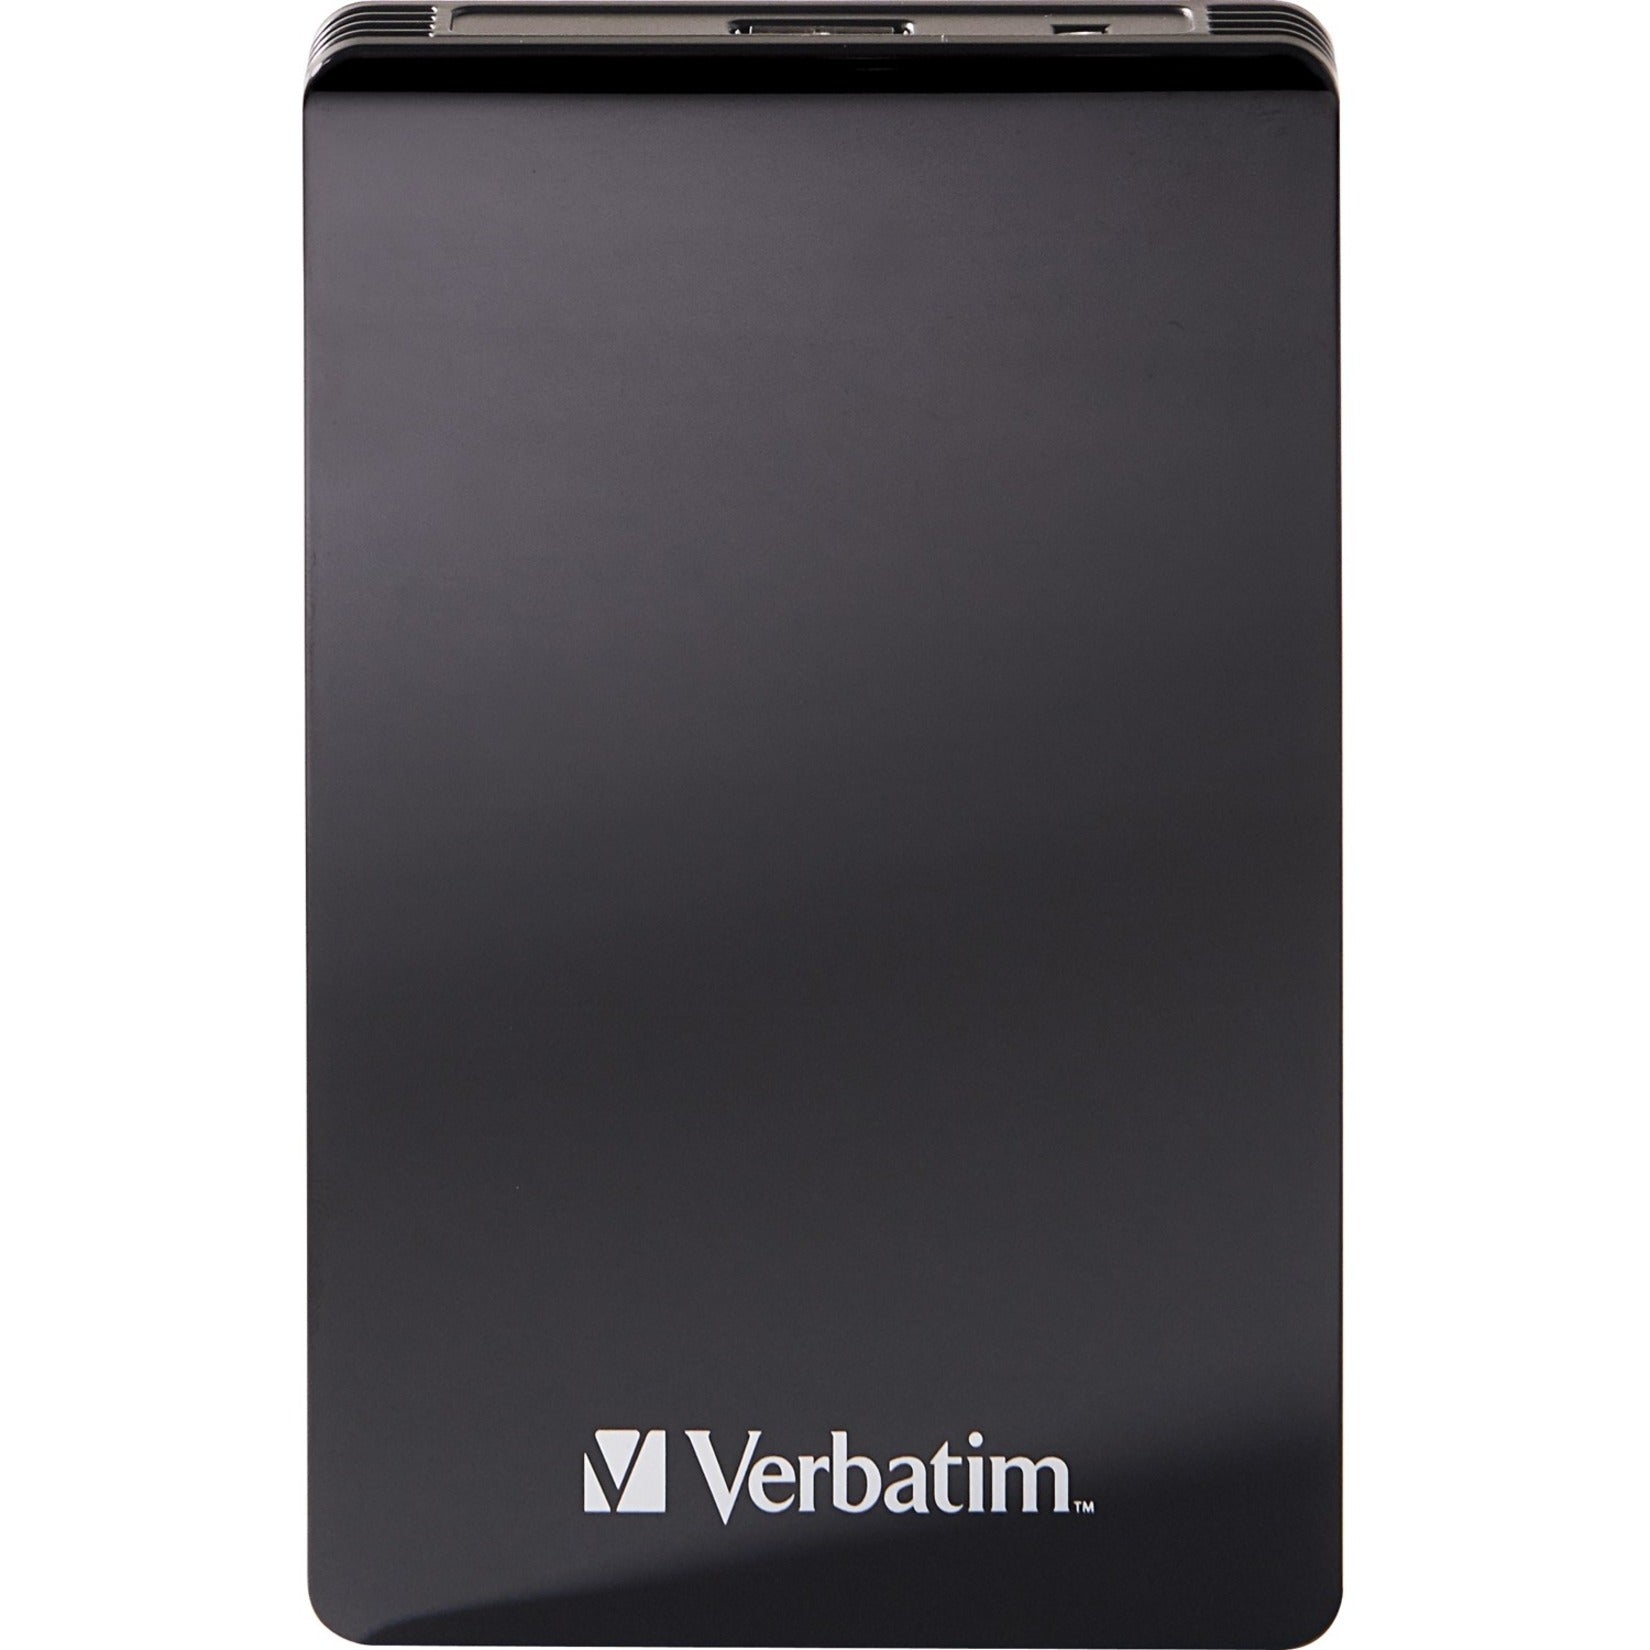 Verbatim 70381 Vx460 External SSD, USB 3.1 Gen 1, 128GB - Black